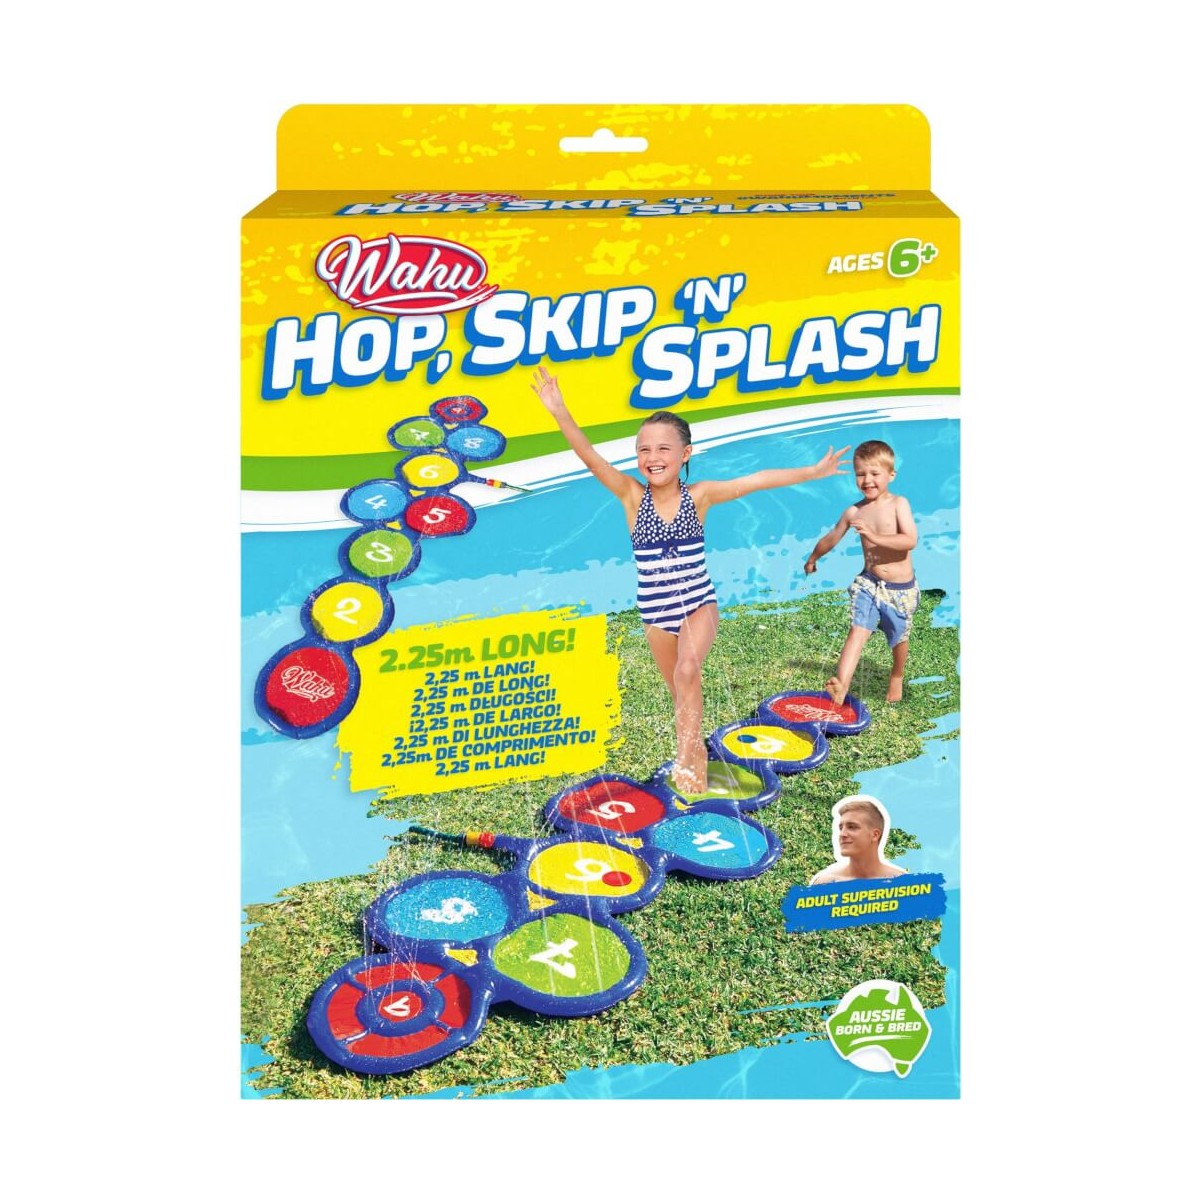 Wahu Hop Skin'n Splash Garden Water Toy For Kids Ages 5+